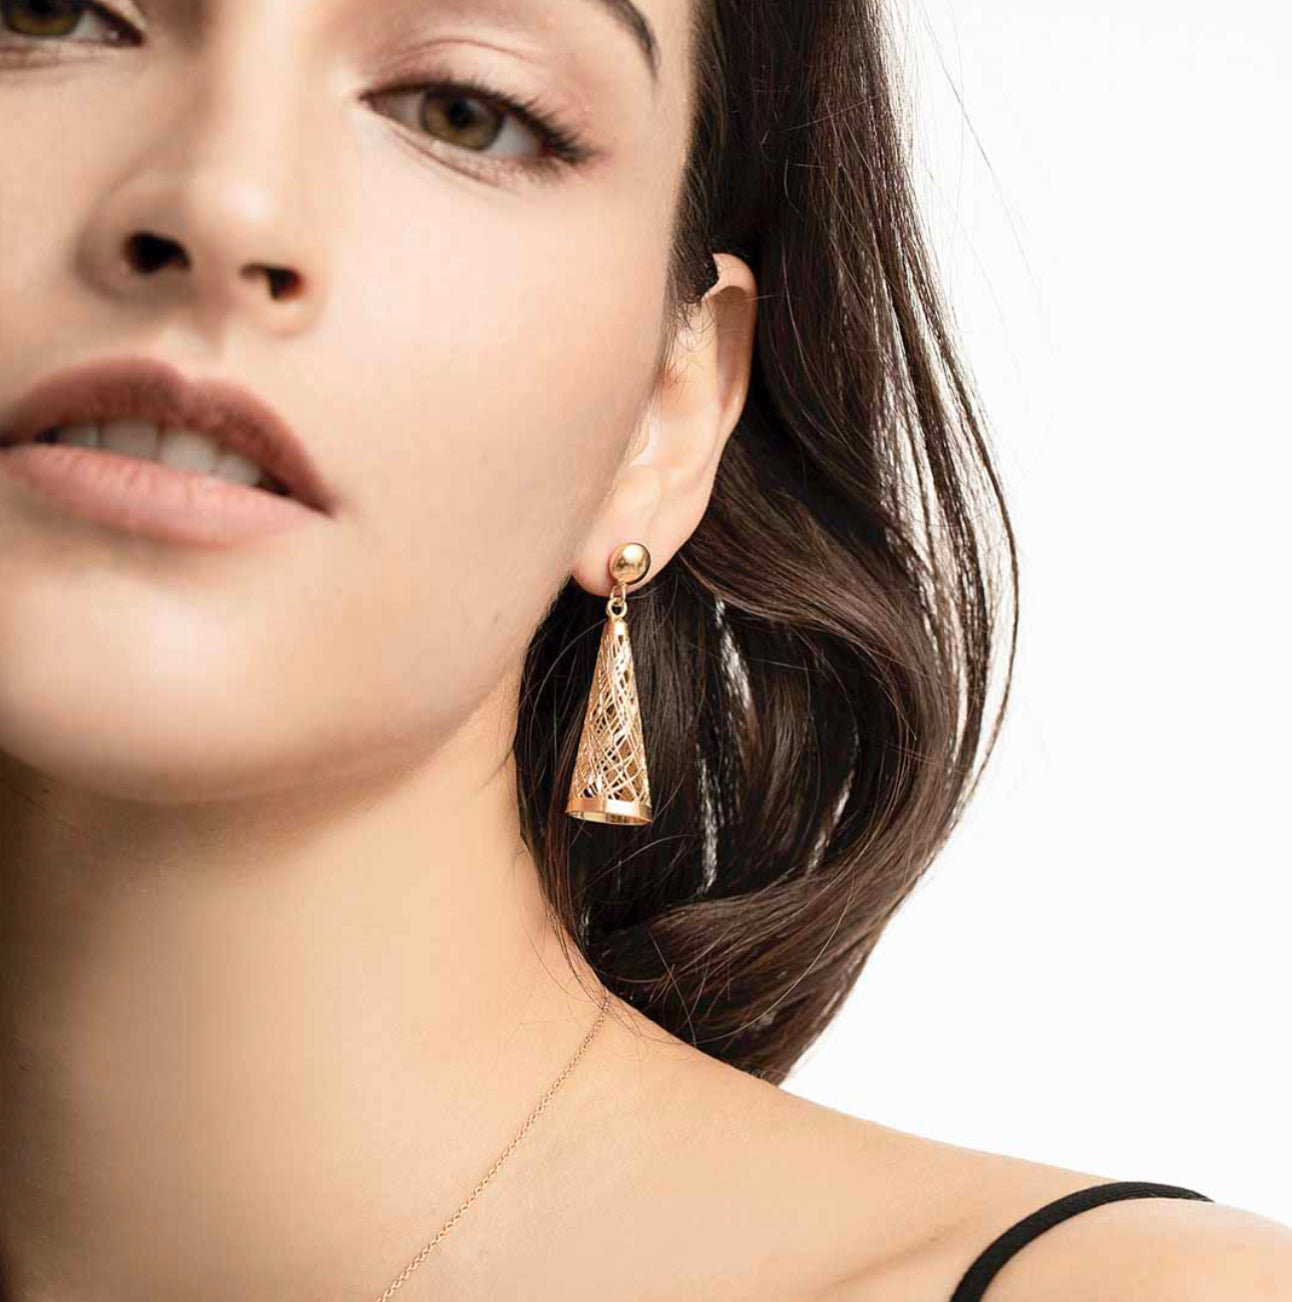 Triangle Earrings Gold